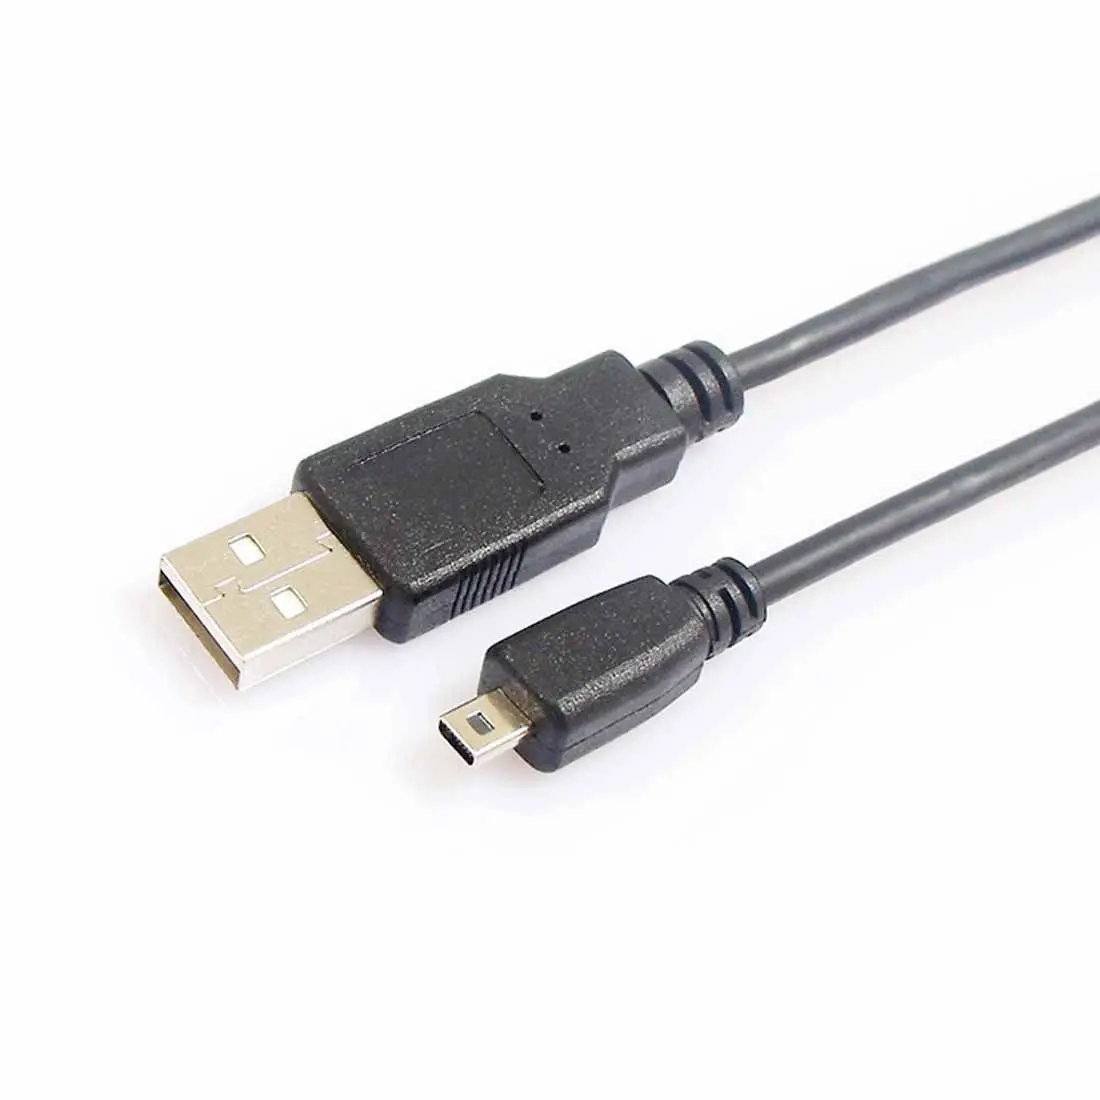 USB Cable for PANASONIC LUMIX DMC-FZ15 FZ18 FZ20 FZ3 FZ30 FZ4 FZ5 FZ50 FZ7 FZ8 DMC-FX01 FX07 FX10 FX12 FX3 FX30 LZ7 TZ1 TZ3